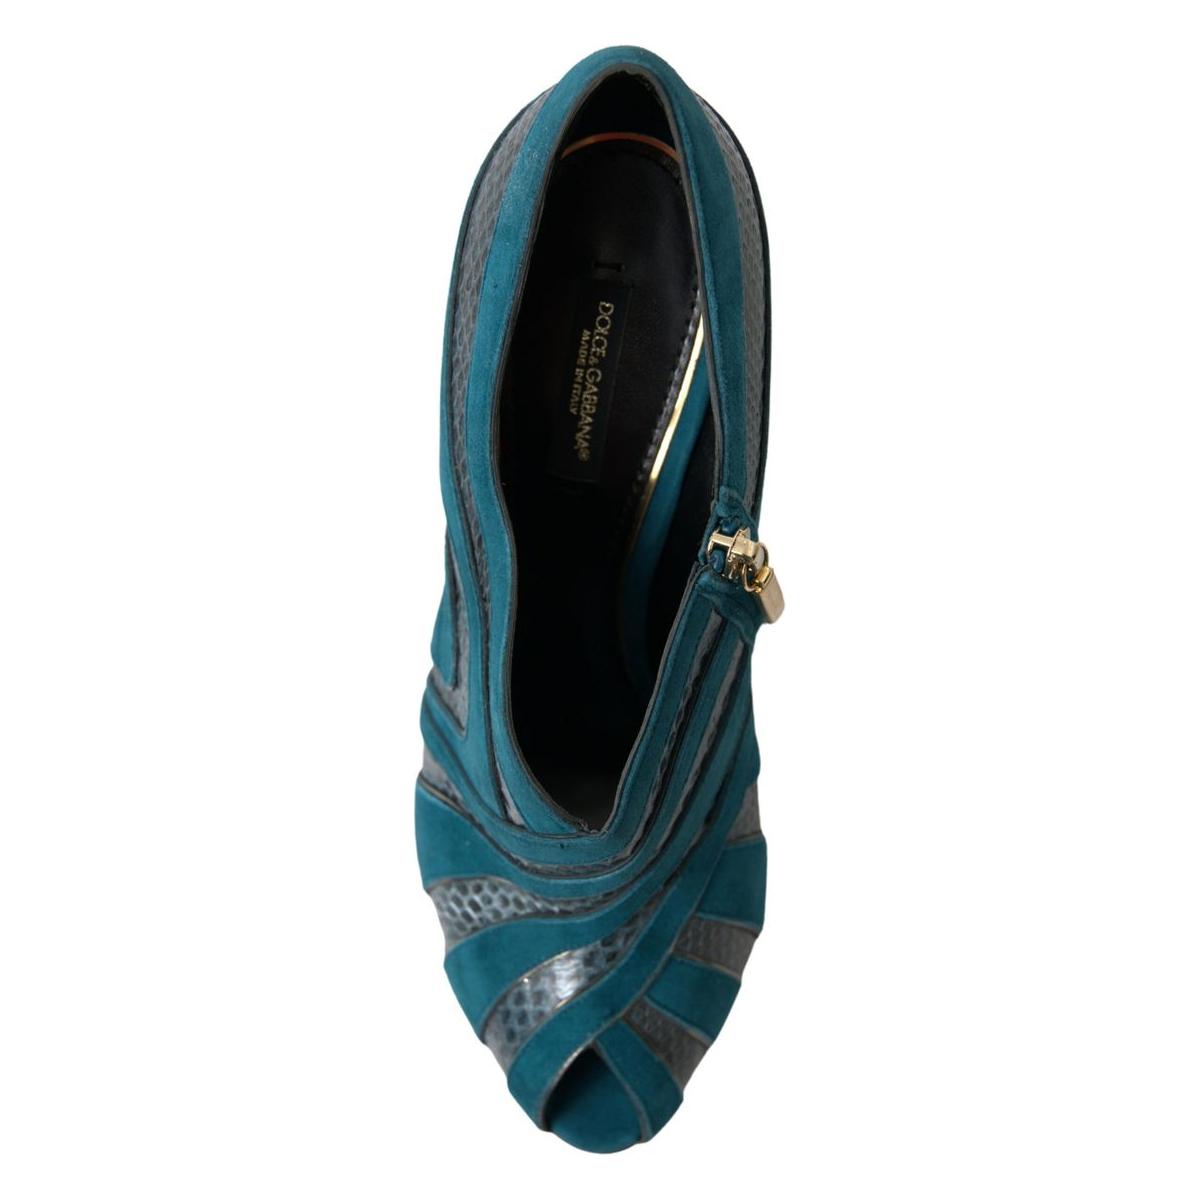 Dolce & Gabbana Chic Blue Peep Toe Stiletto Ankle Booties blue-teal-snakeskin-peep-toe-ankle-booties-shoes 465A8814-scaled-a9505a4d-6e7_64b630de-c38a-4cfe-97ec-e1c1e9620c4f.jpg